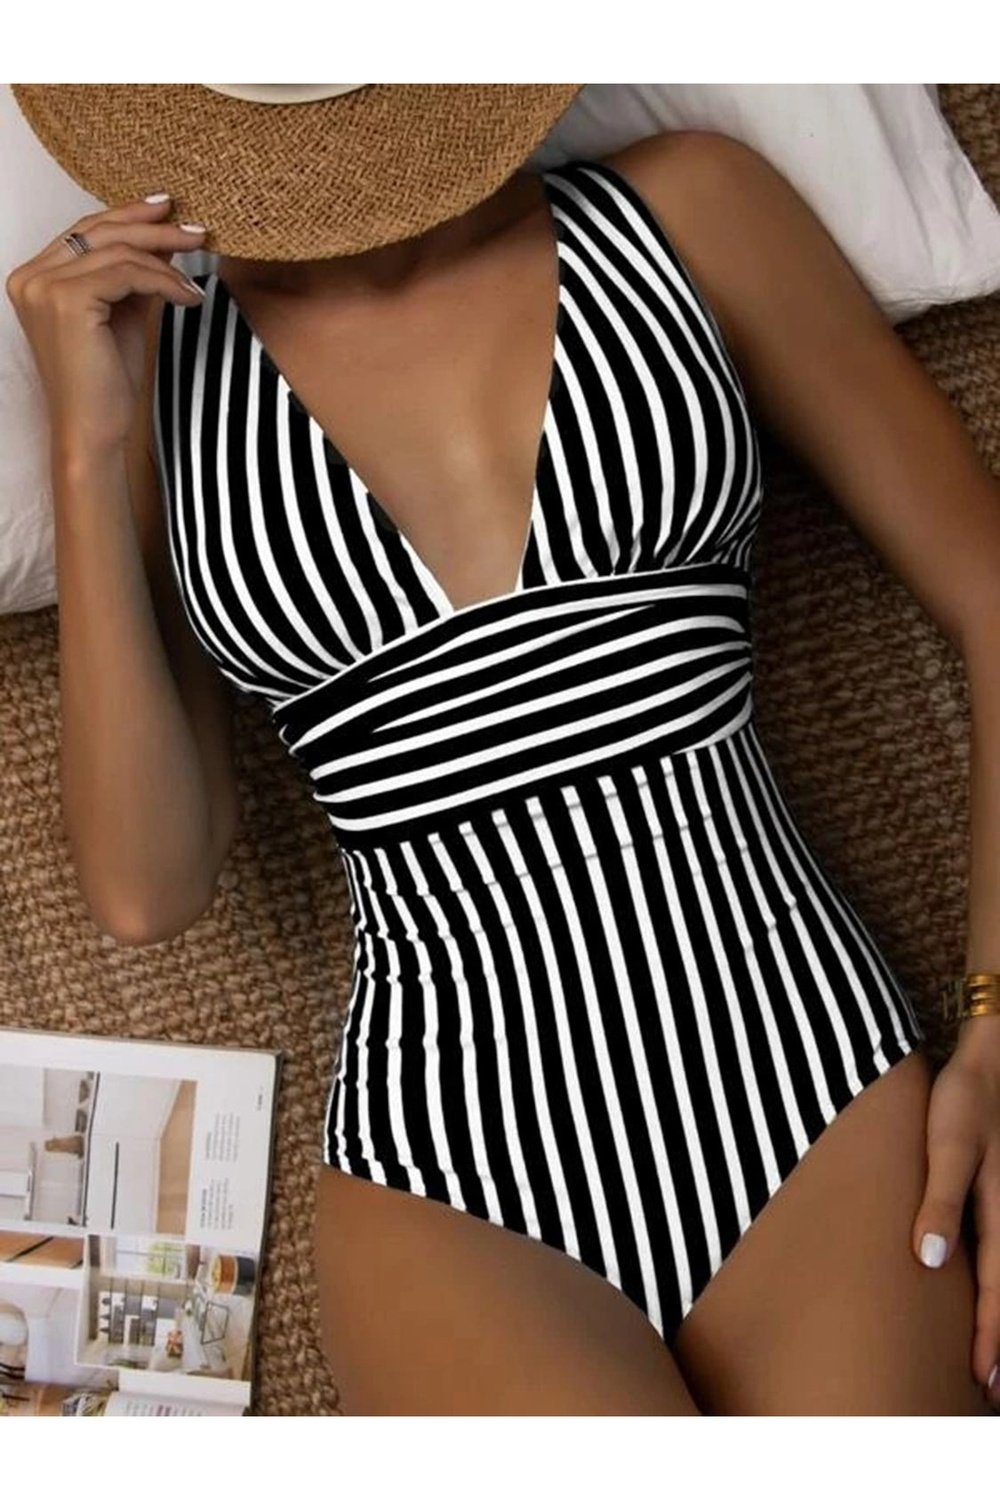 Striped Plunge Sleeveless One-Piece Swimwear - Swimwear One-Pieces - FITGGINS